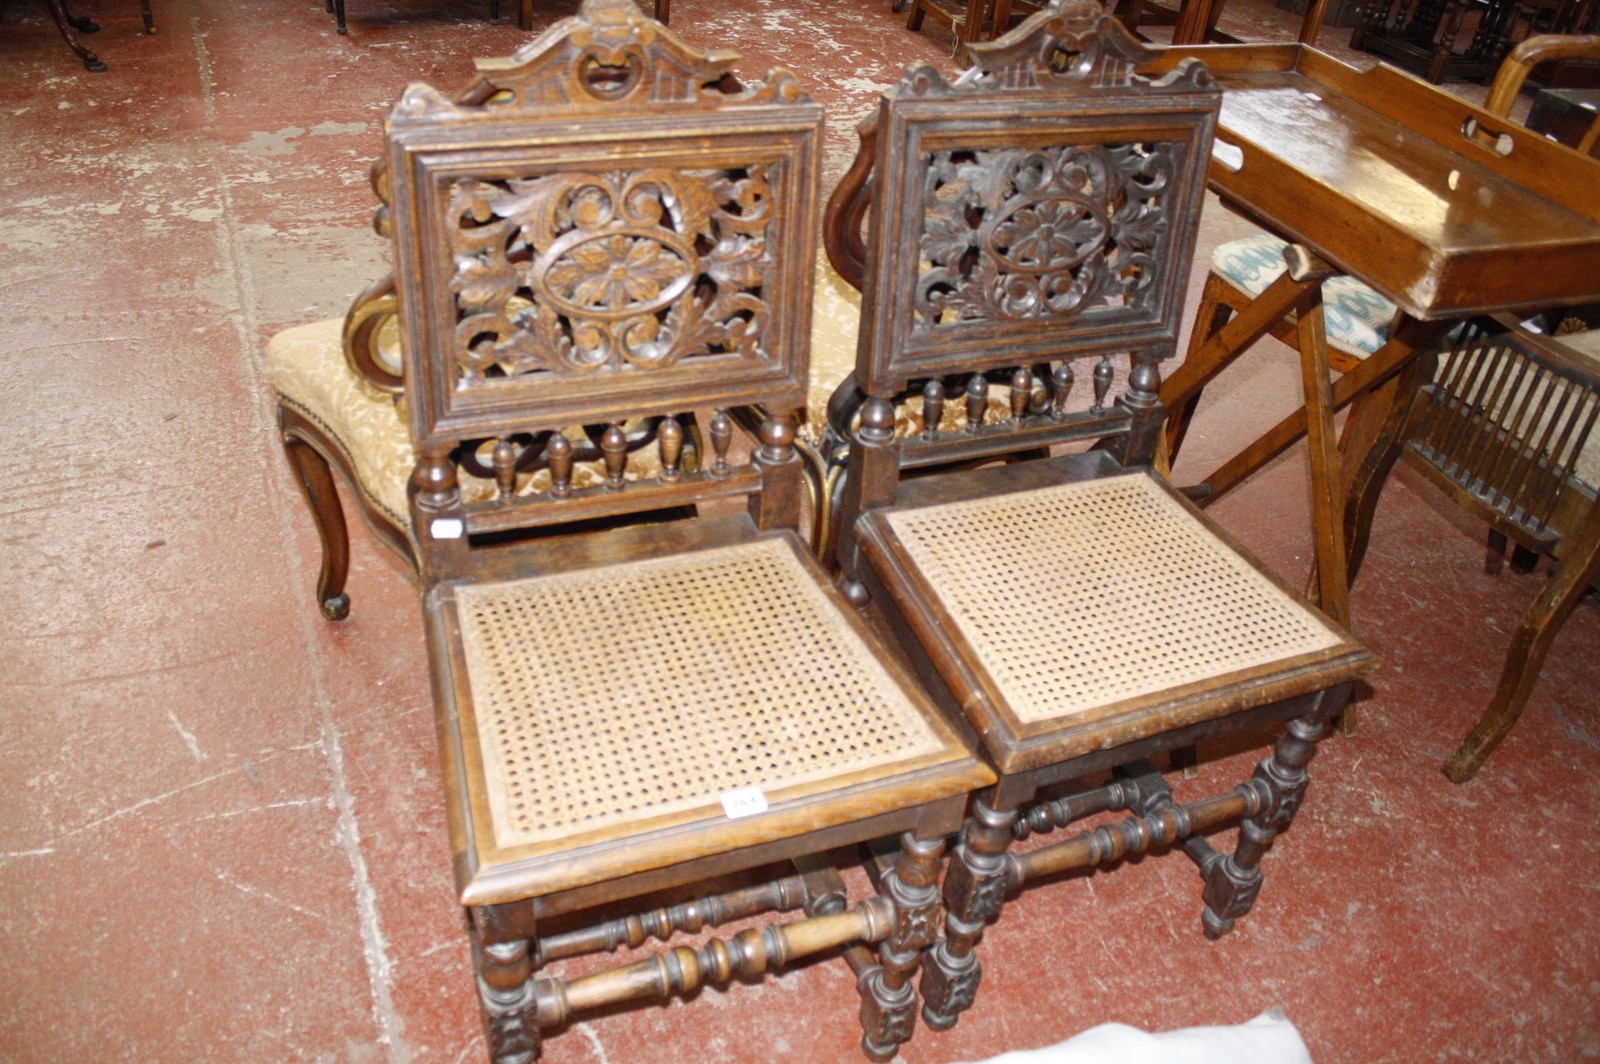 Two oak chairs